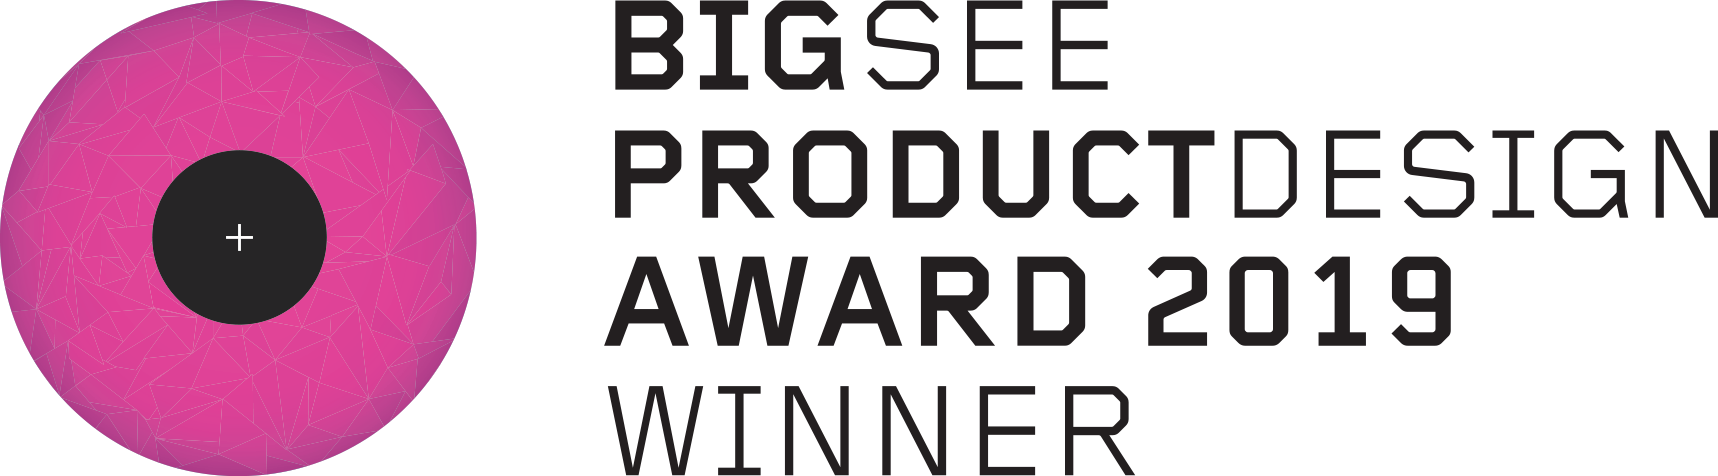 Big See Product Design Award 2019 Winner